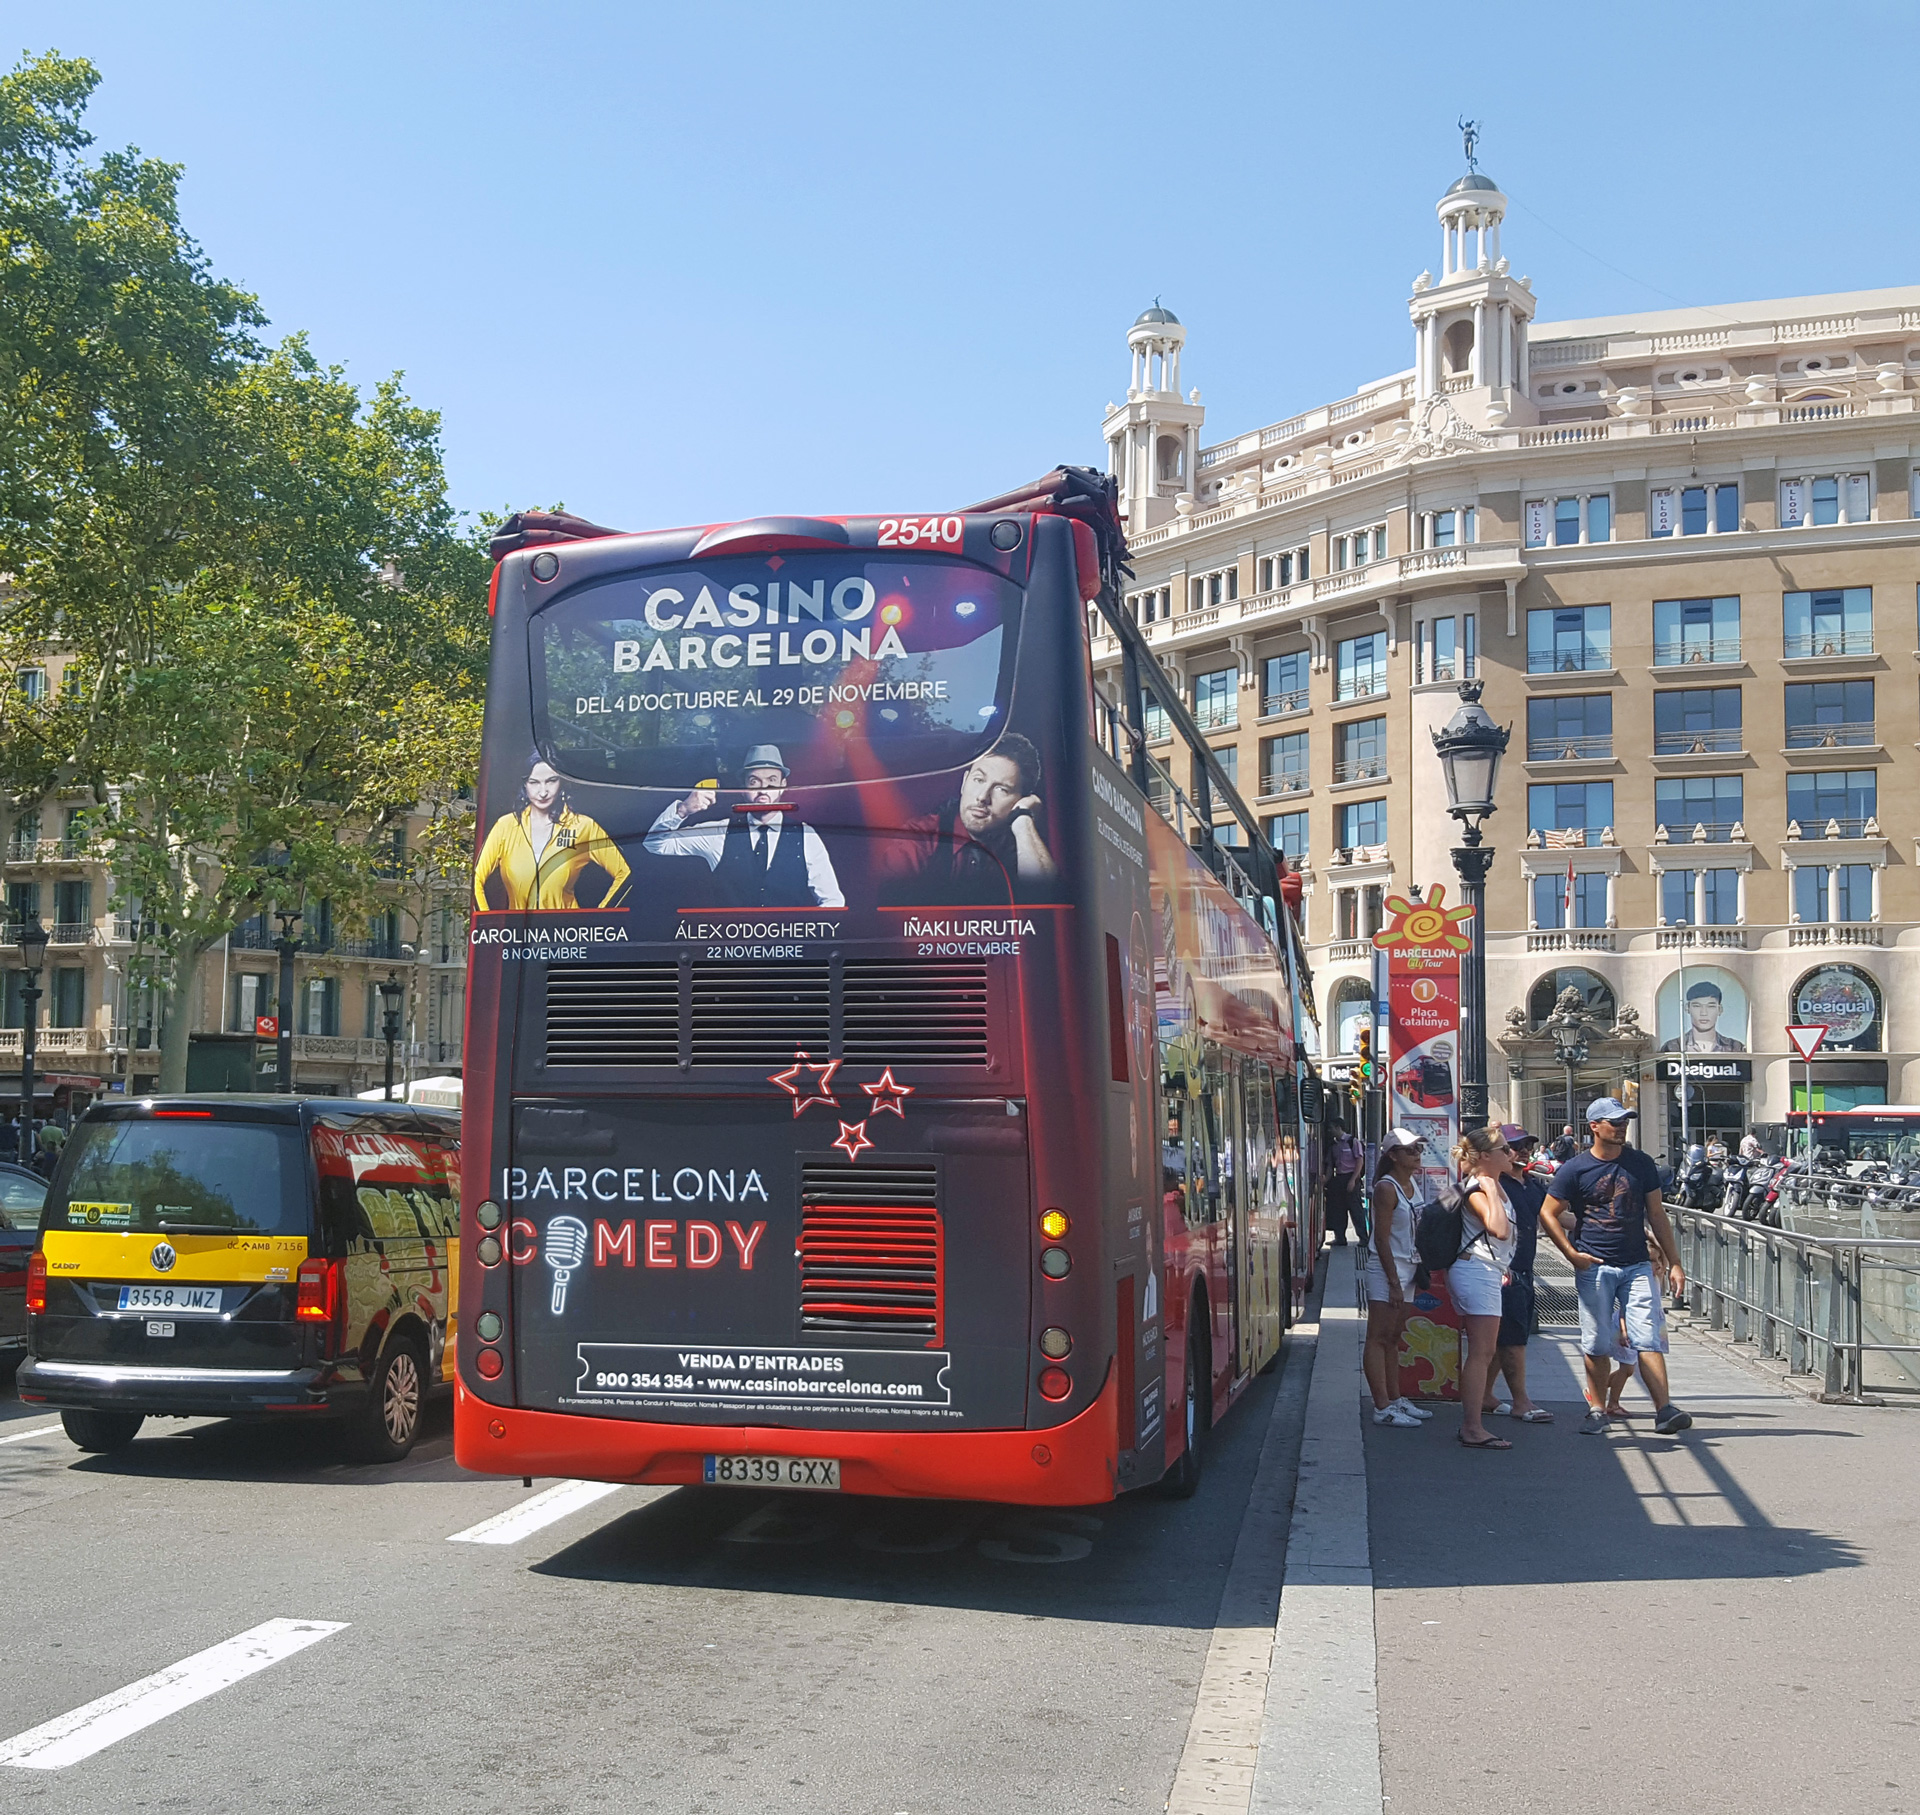 Barcelona sightseeing bus advertising